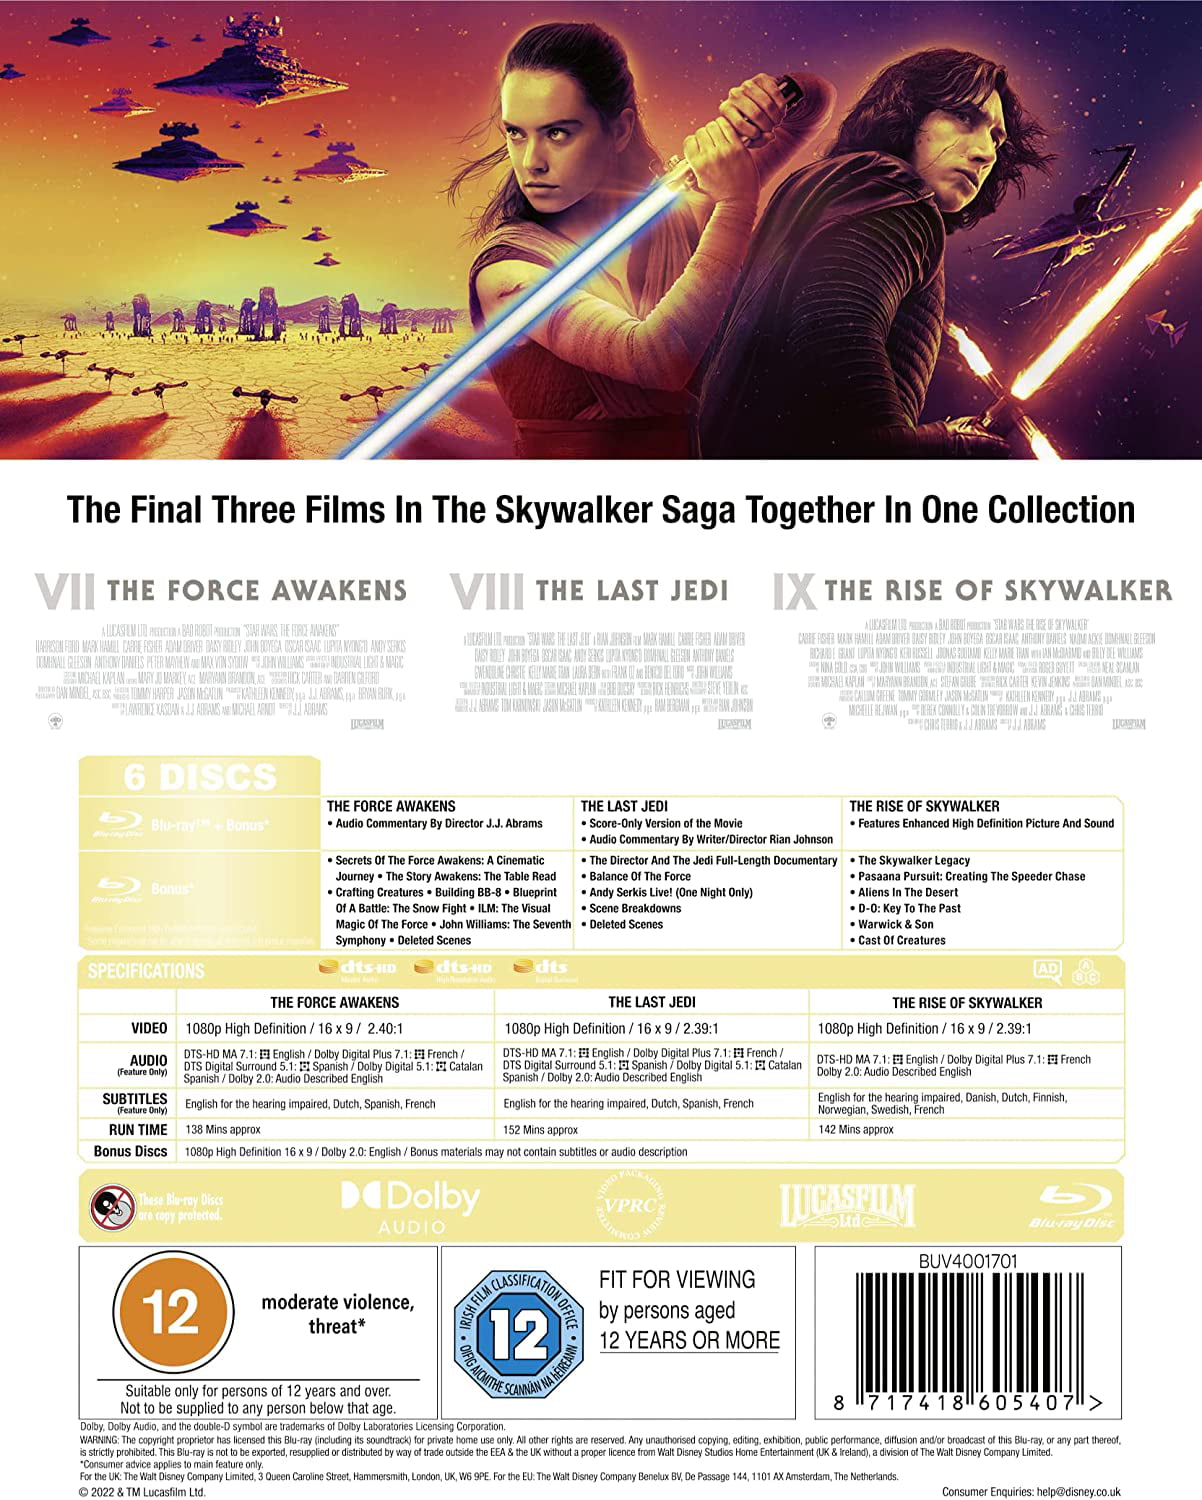  Star Wars: Episode VII: The Force Awakens [Blu-Ray]: DVD et Blu-ray:  Blu-ray